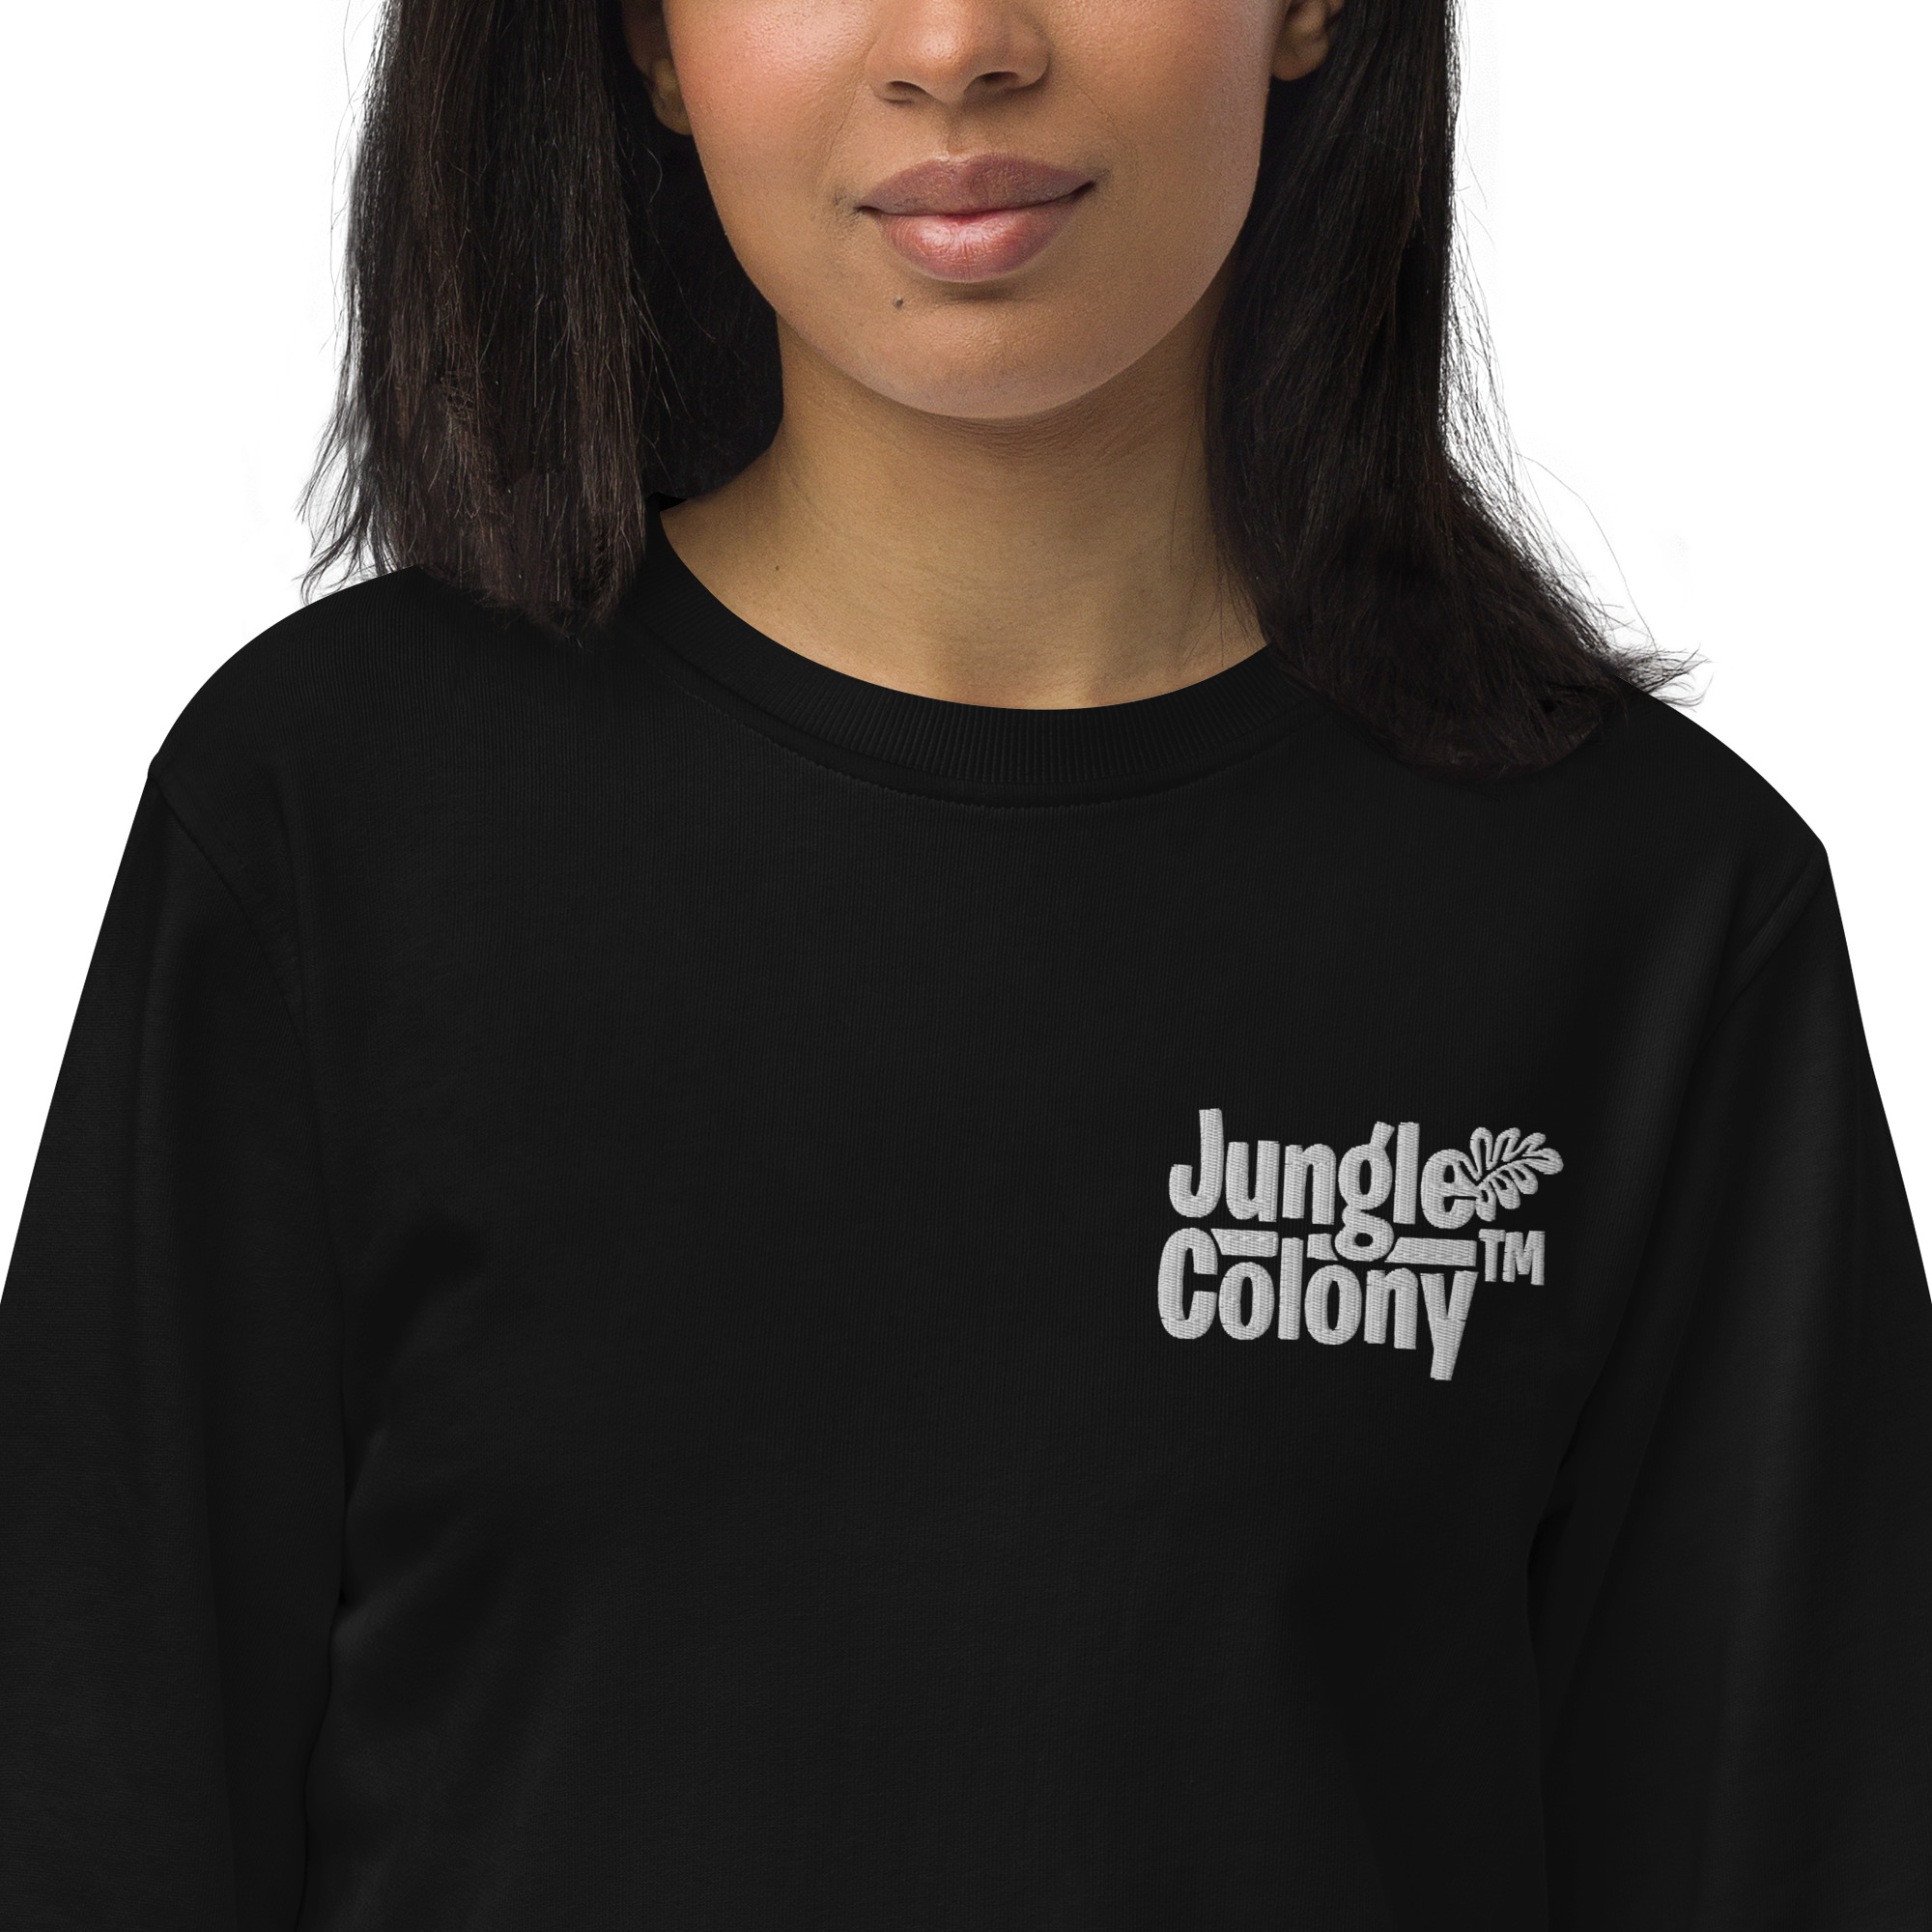 unisex-organic-sweatshirt-black-zoomed-in-64200a7834da8.jpg